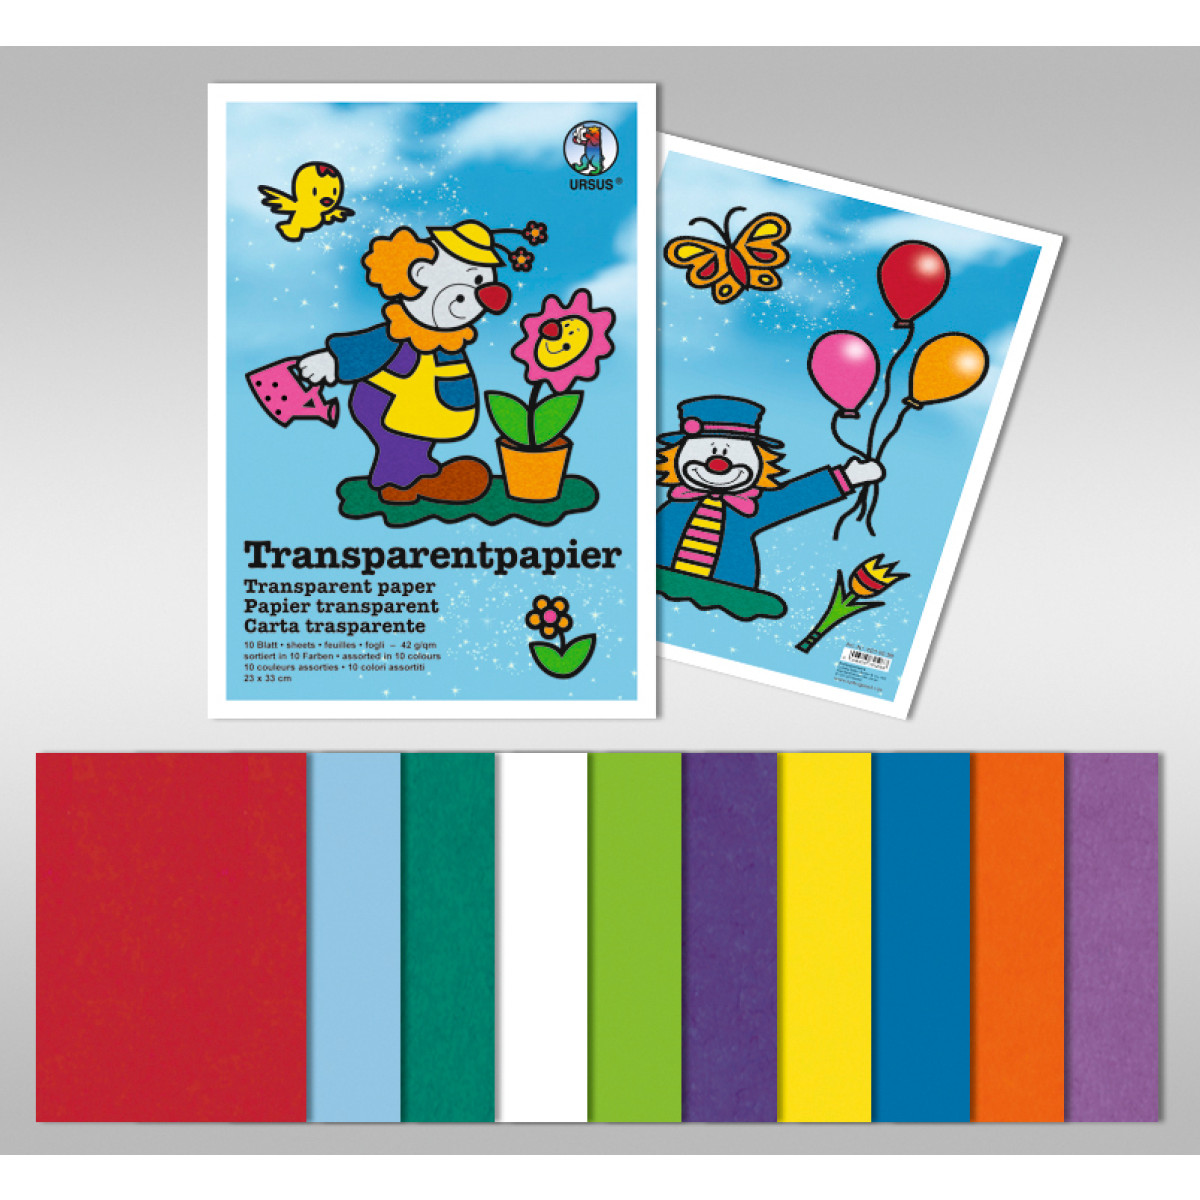 Transparentpapier (Drachenpapier) 42 g/qm 35 x 50 cm - 50 Blatt in 10 Farben